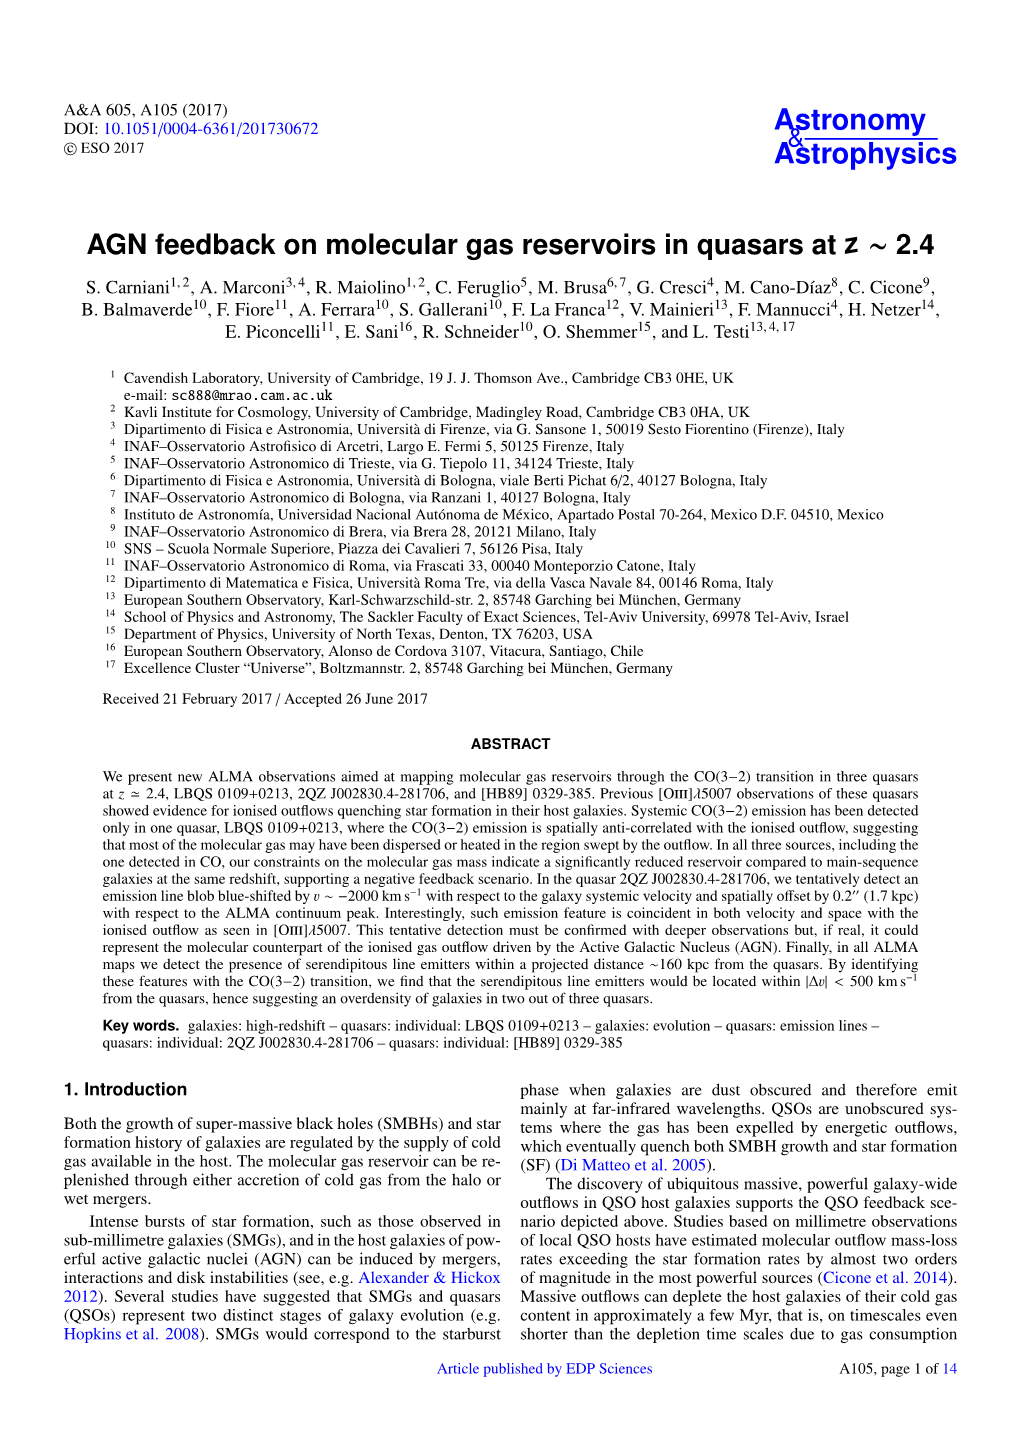 AGN Feedback on Molecular Gas Reservoirs in Quasars at Z ~